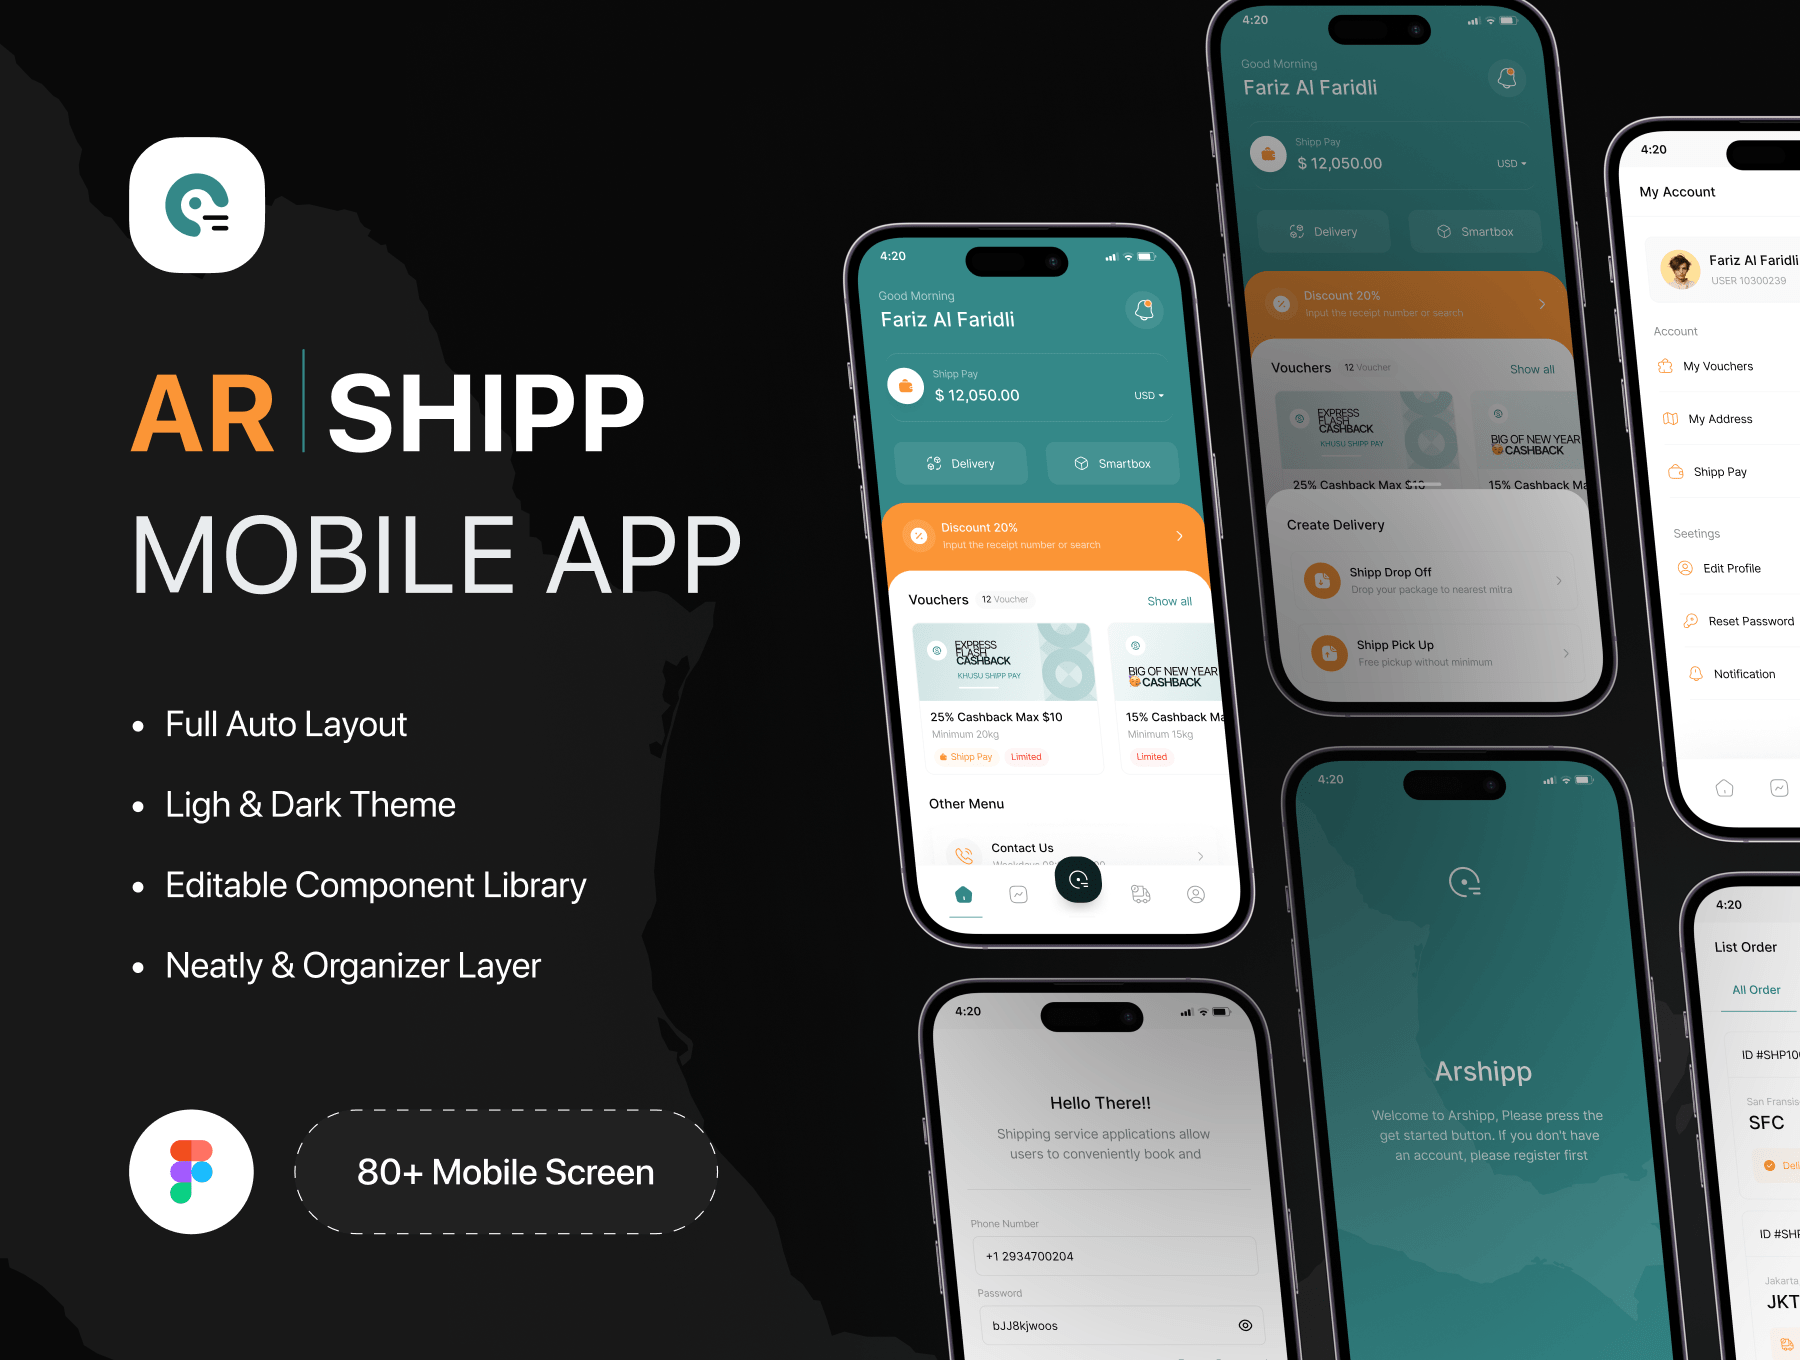 Arshipp-航运移动应用 Arshipp - Shipping Mobile App figma格式-UI/UX-到位啦UI